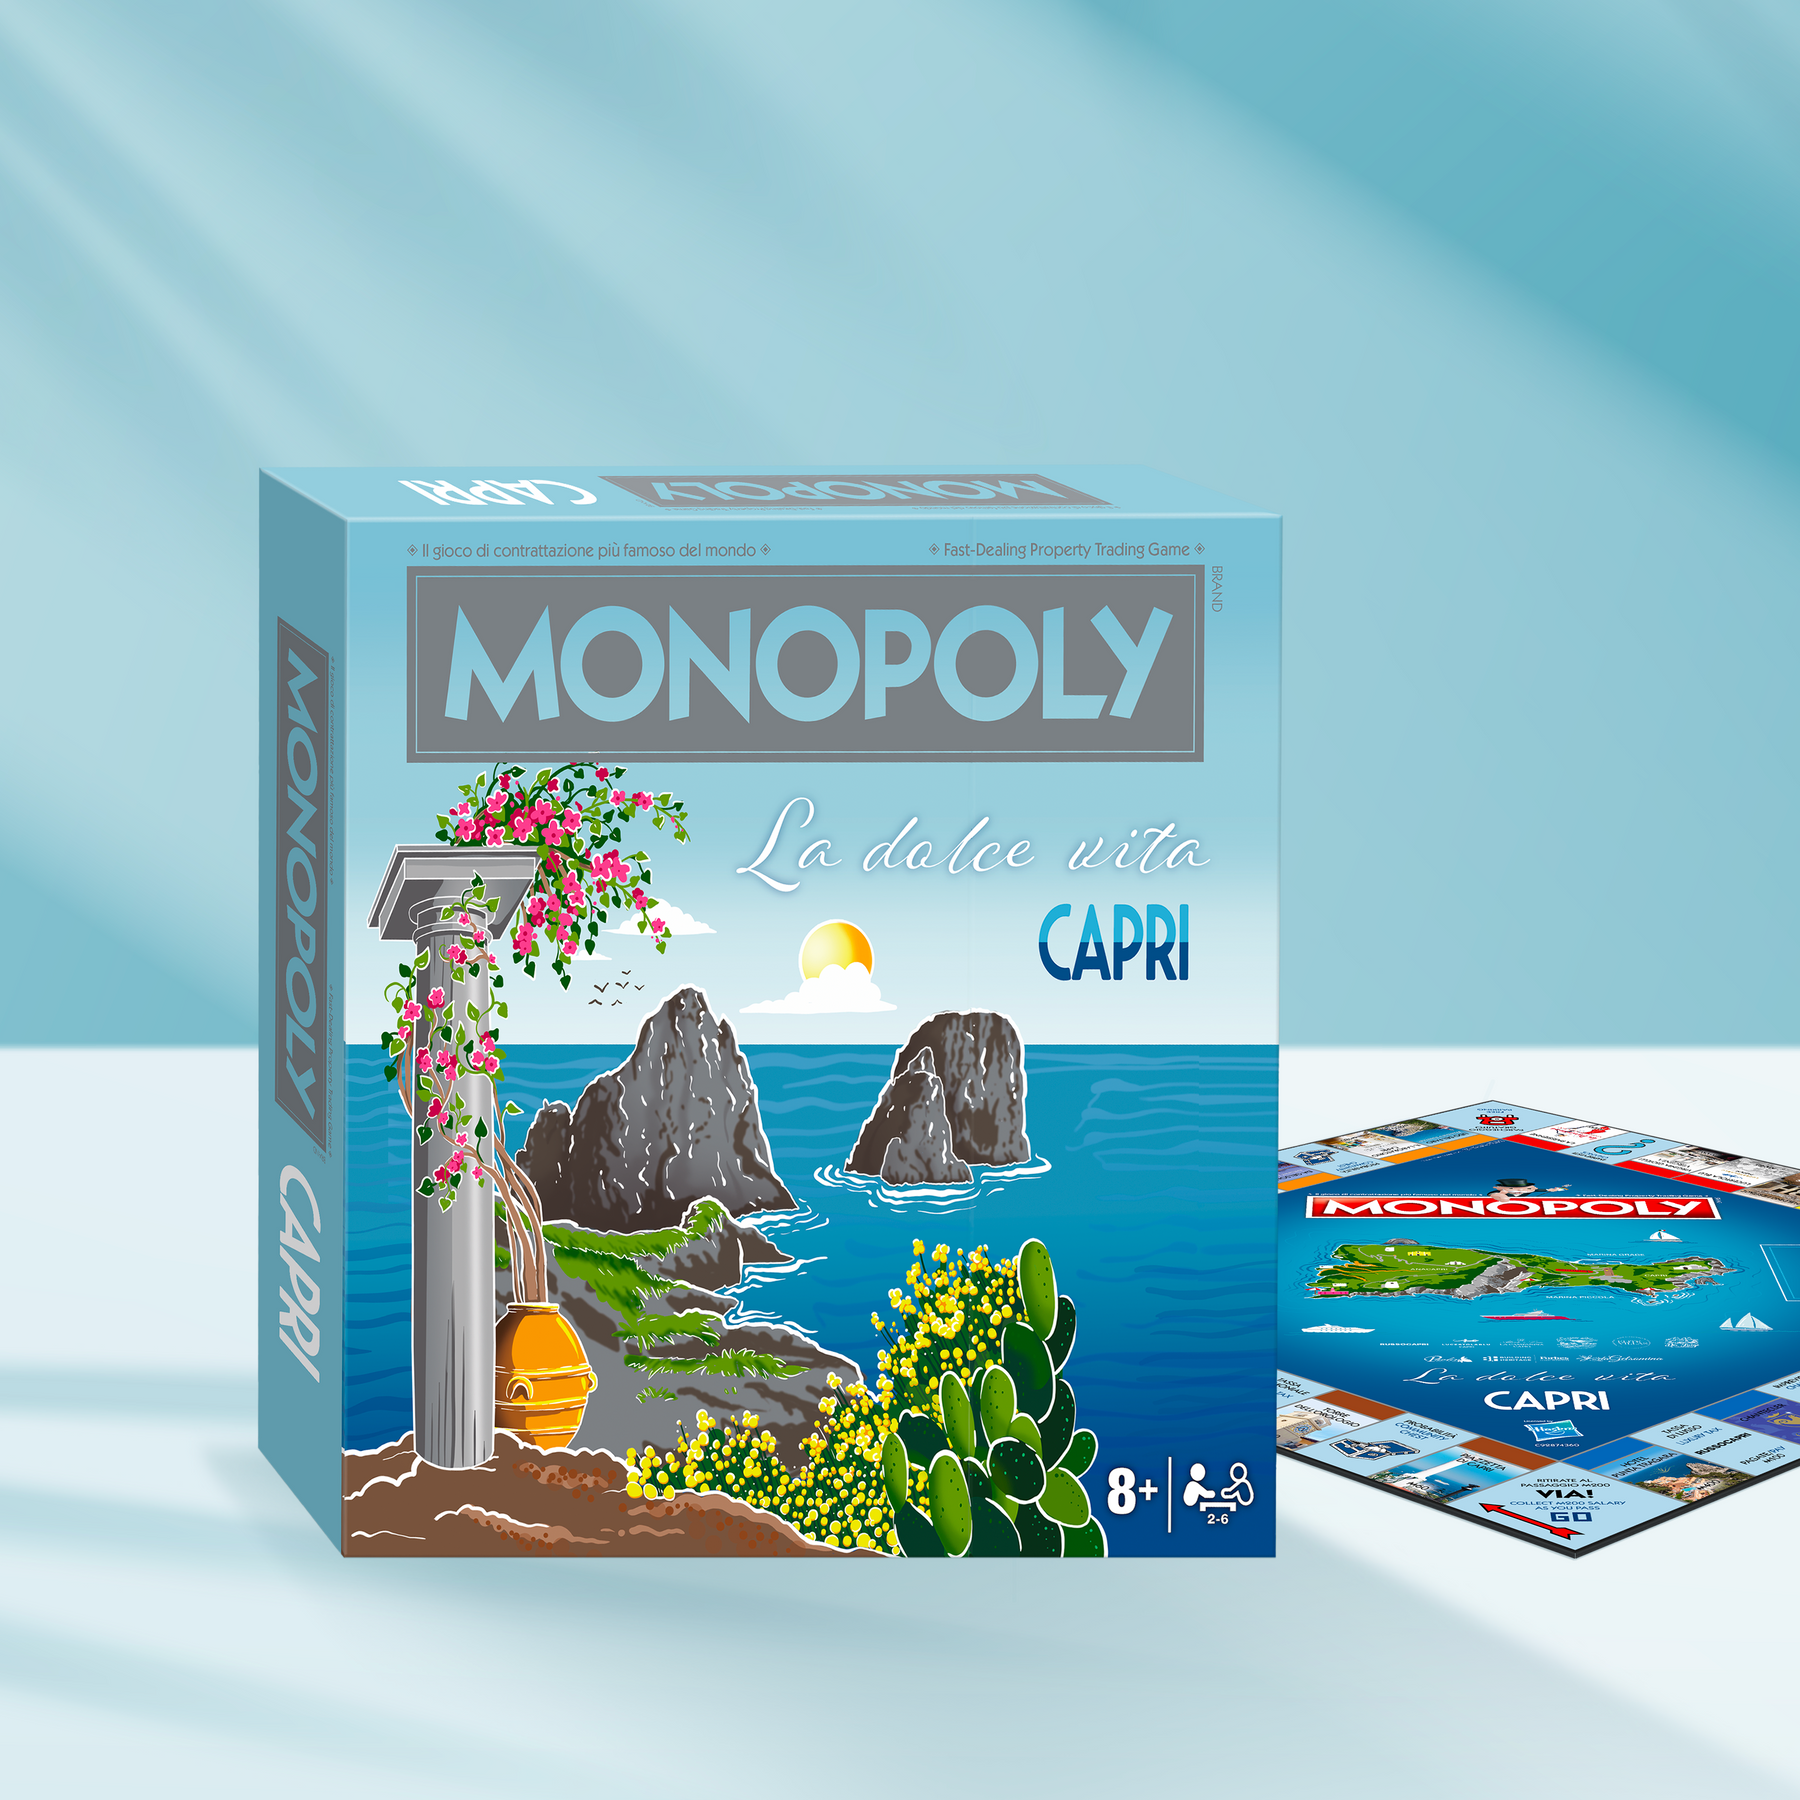 Monopoly Capri